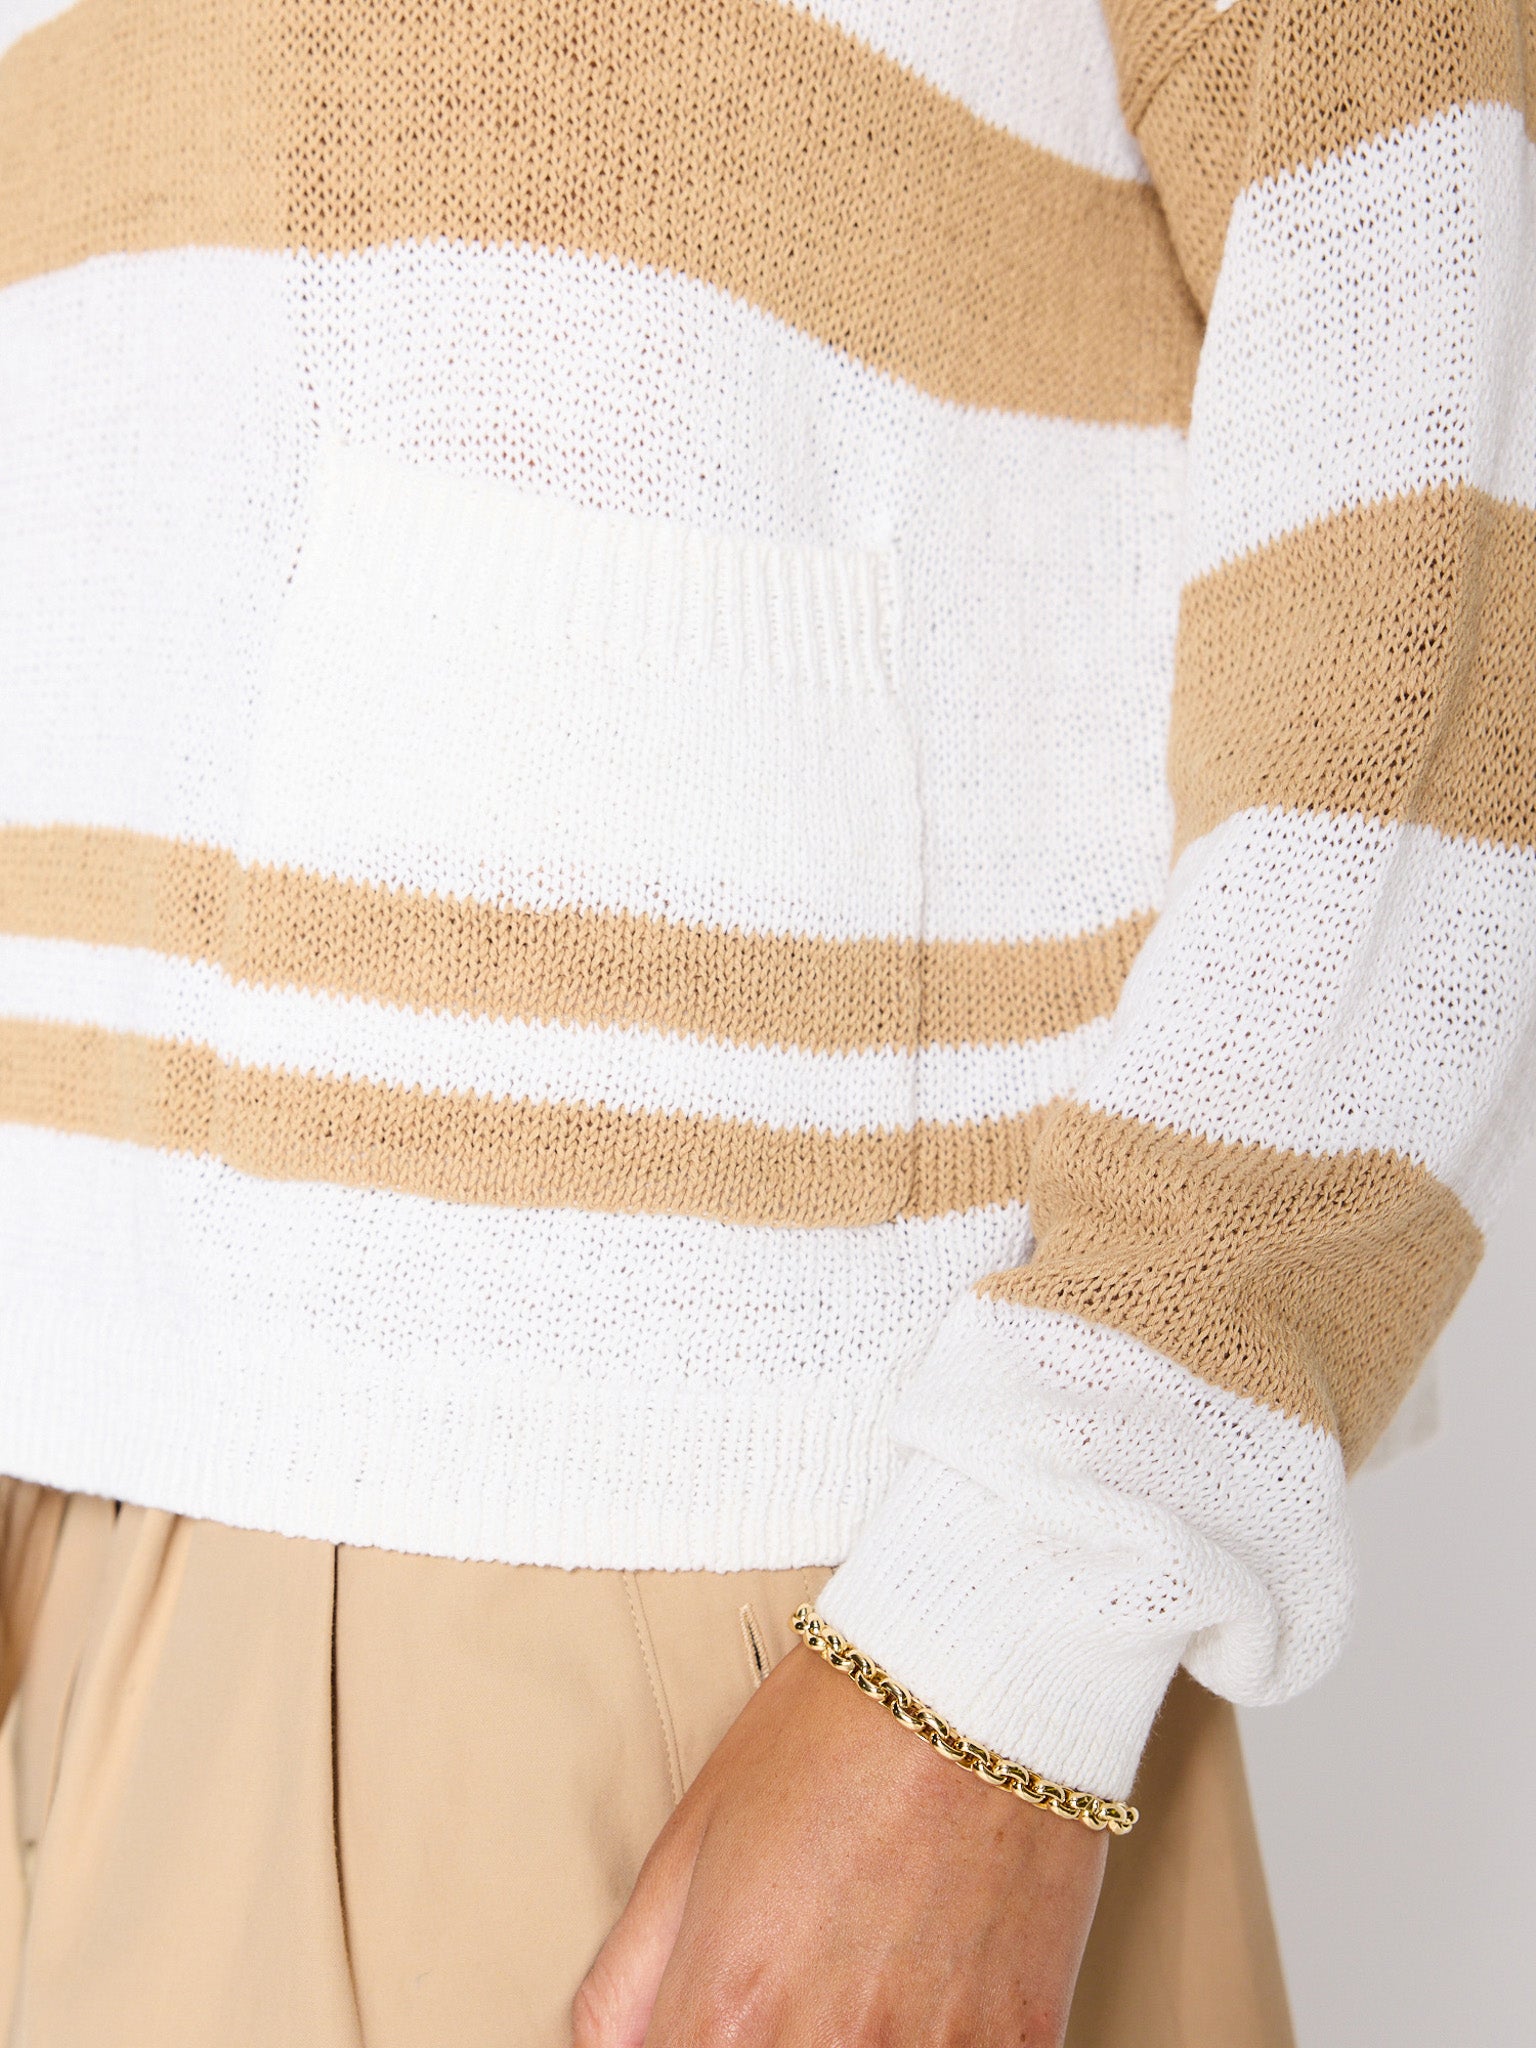 Xila tan white stripe cotton-linen crewneck sweater close up